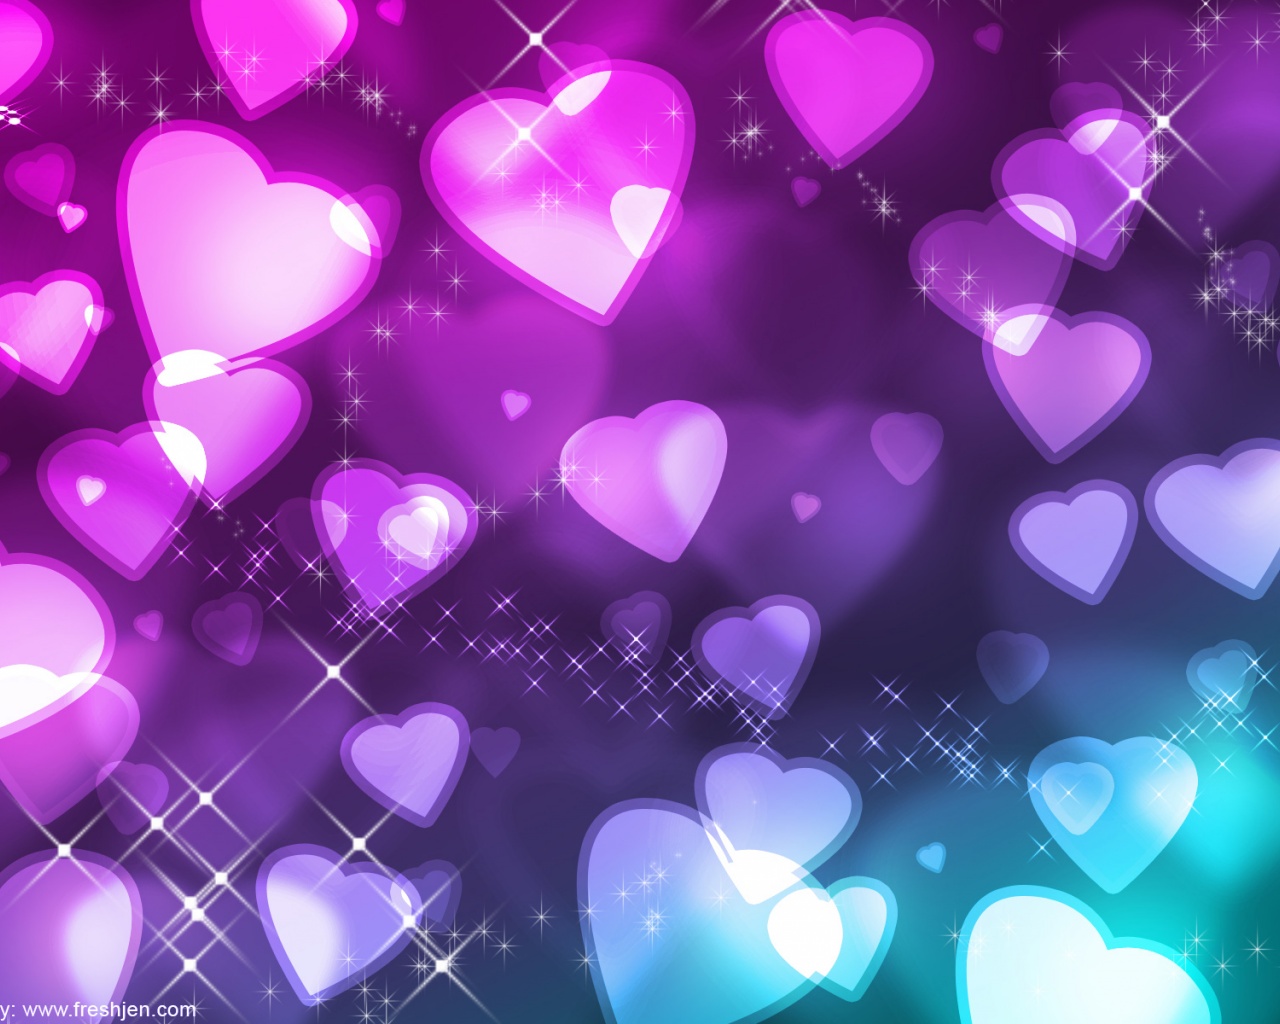 10 Excellent cute heart desktop wallpaper You Can Download It free ...